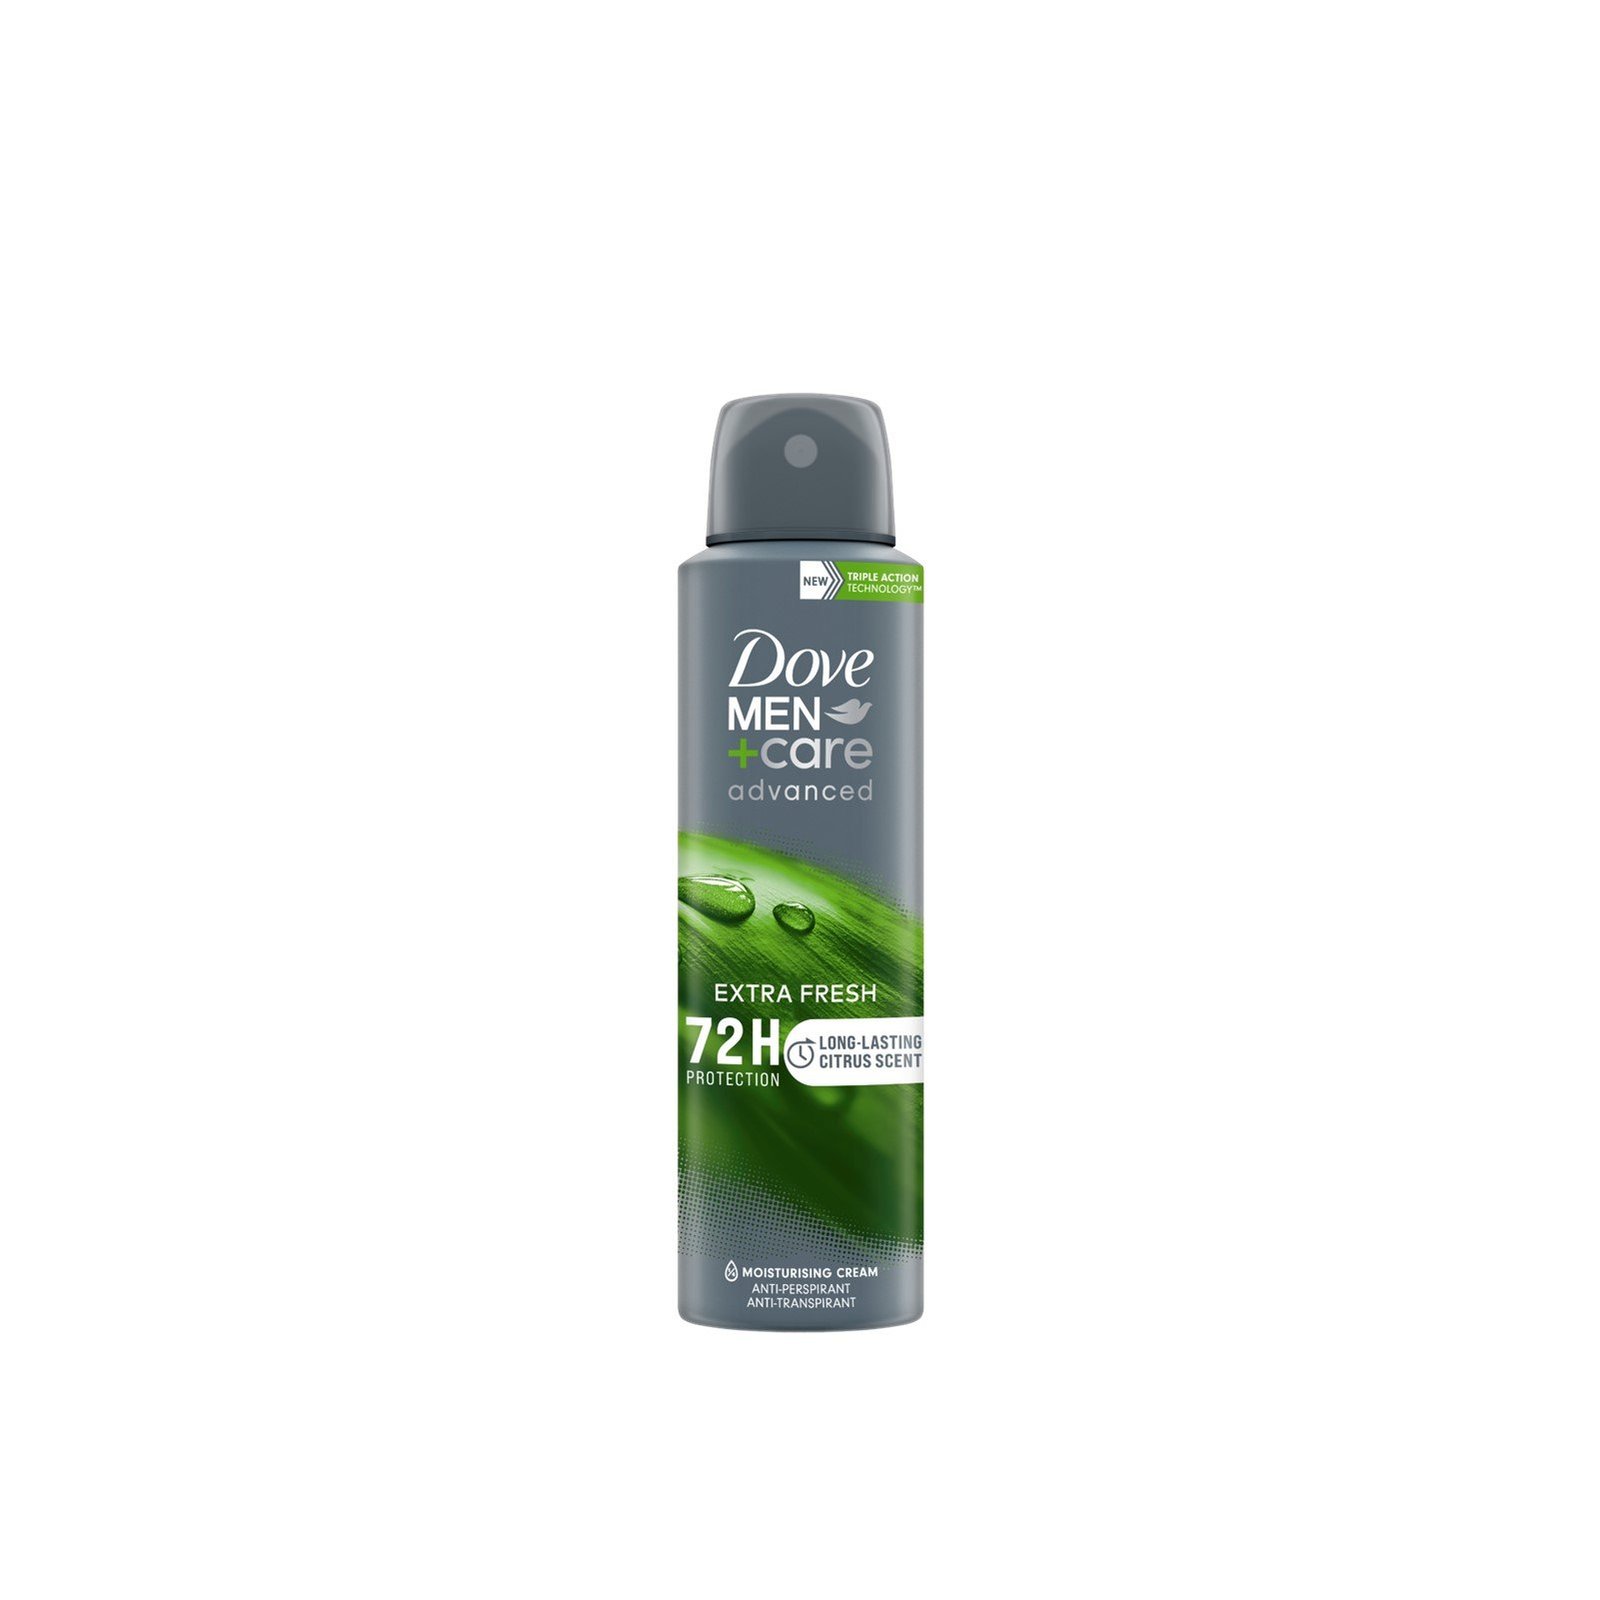 Dove Men+Care Advanced Extra Fresh 72h Anti-Perspirant Deodorant Spray 150ml (5.07 fl oz)